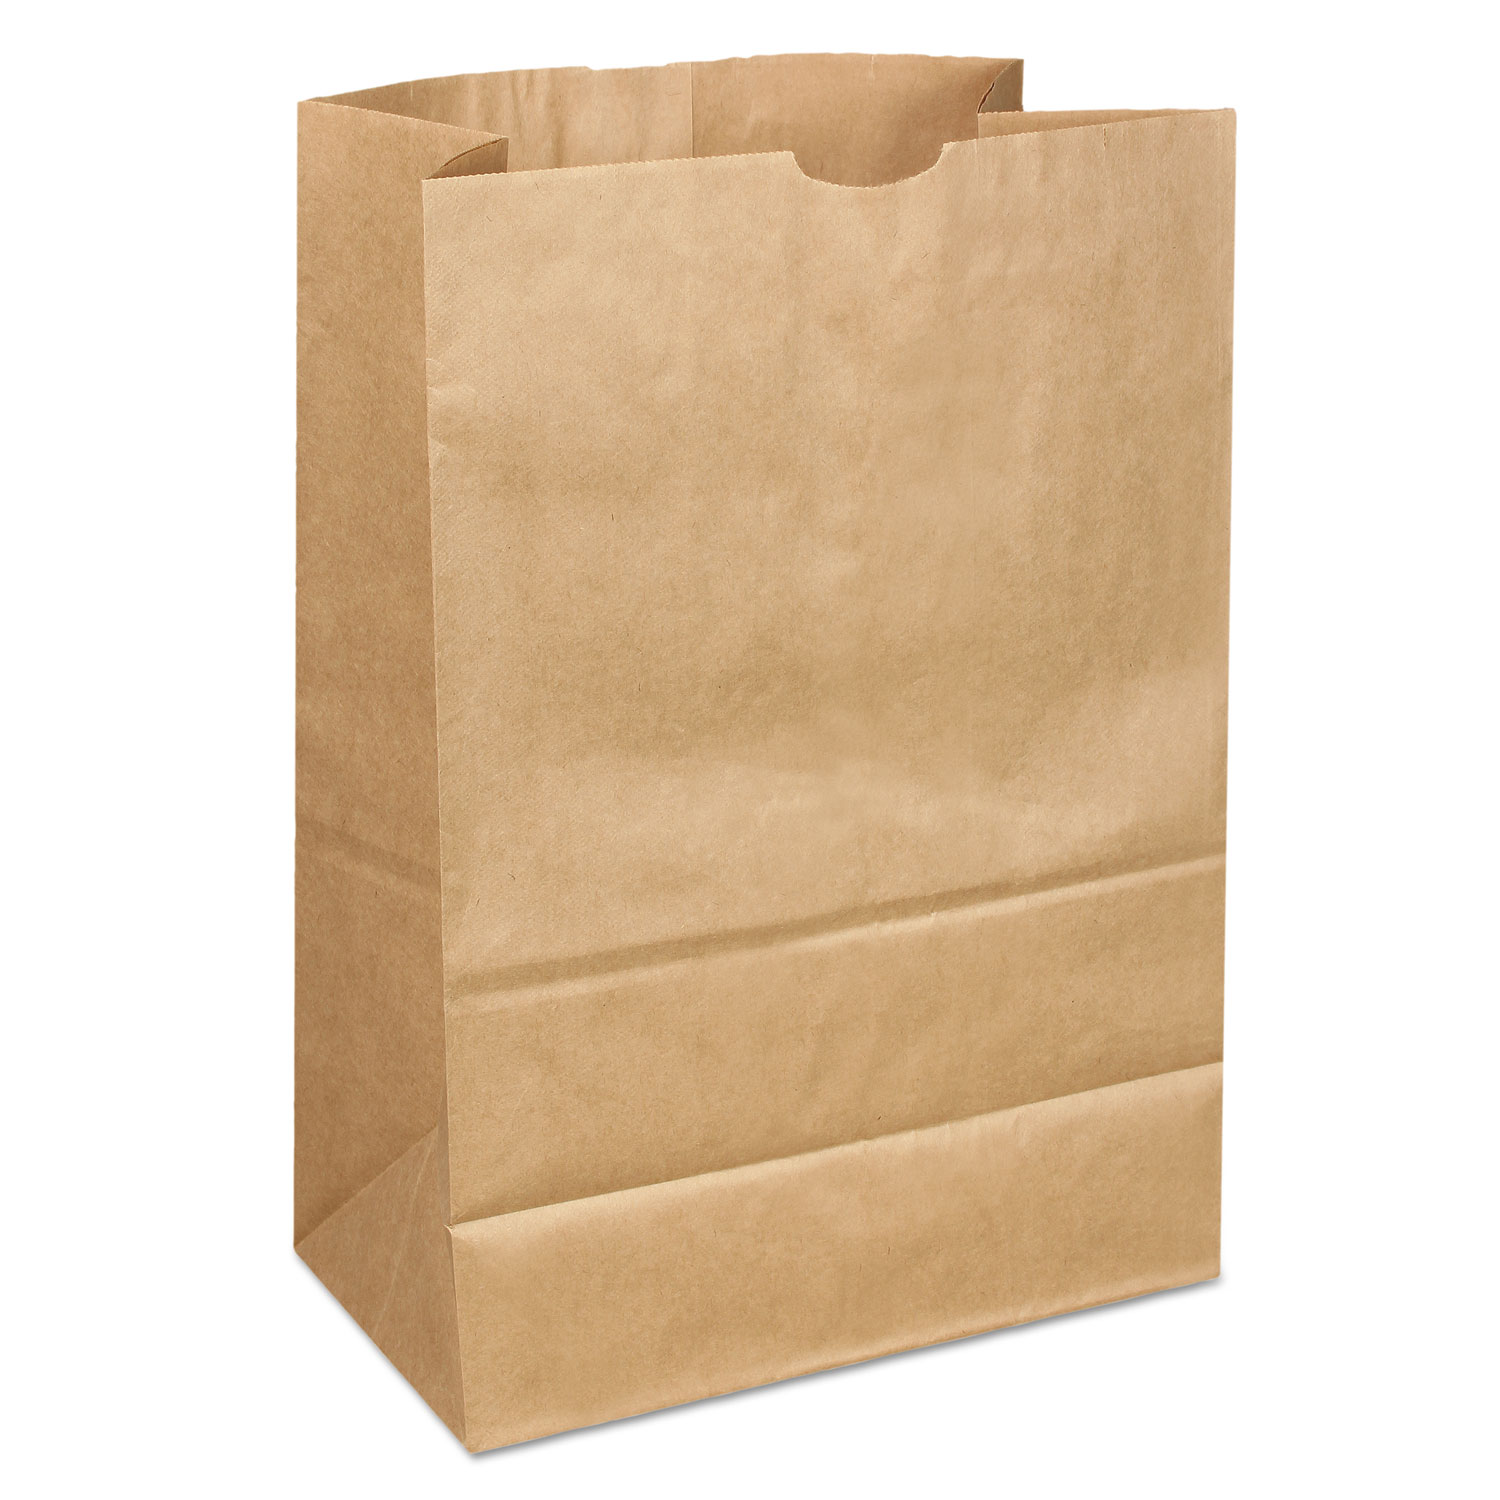 1/6 40/40# Paper Grocery Bag, 40lb Kraft, Standard 12 x 7 x 17, 400 bags